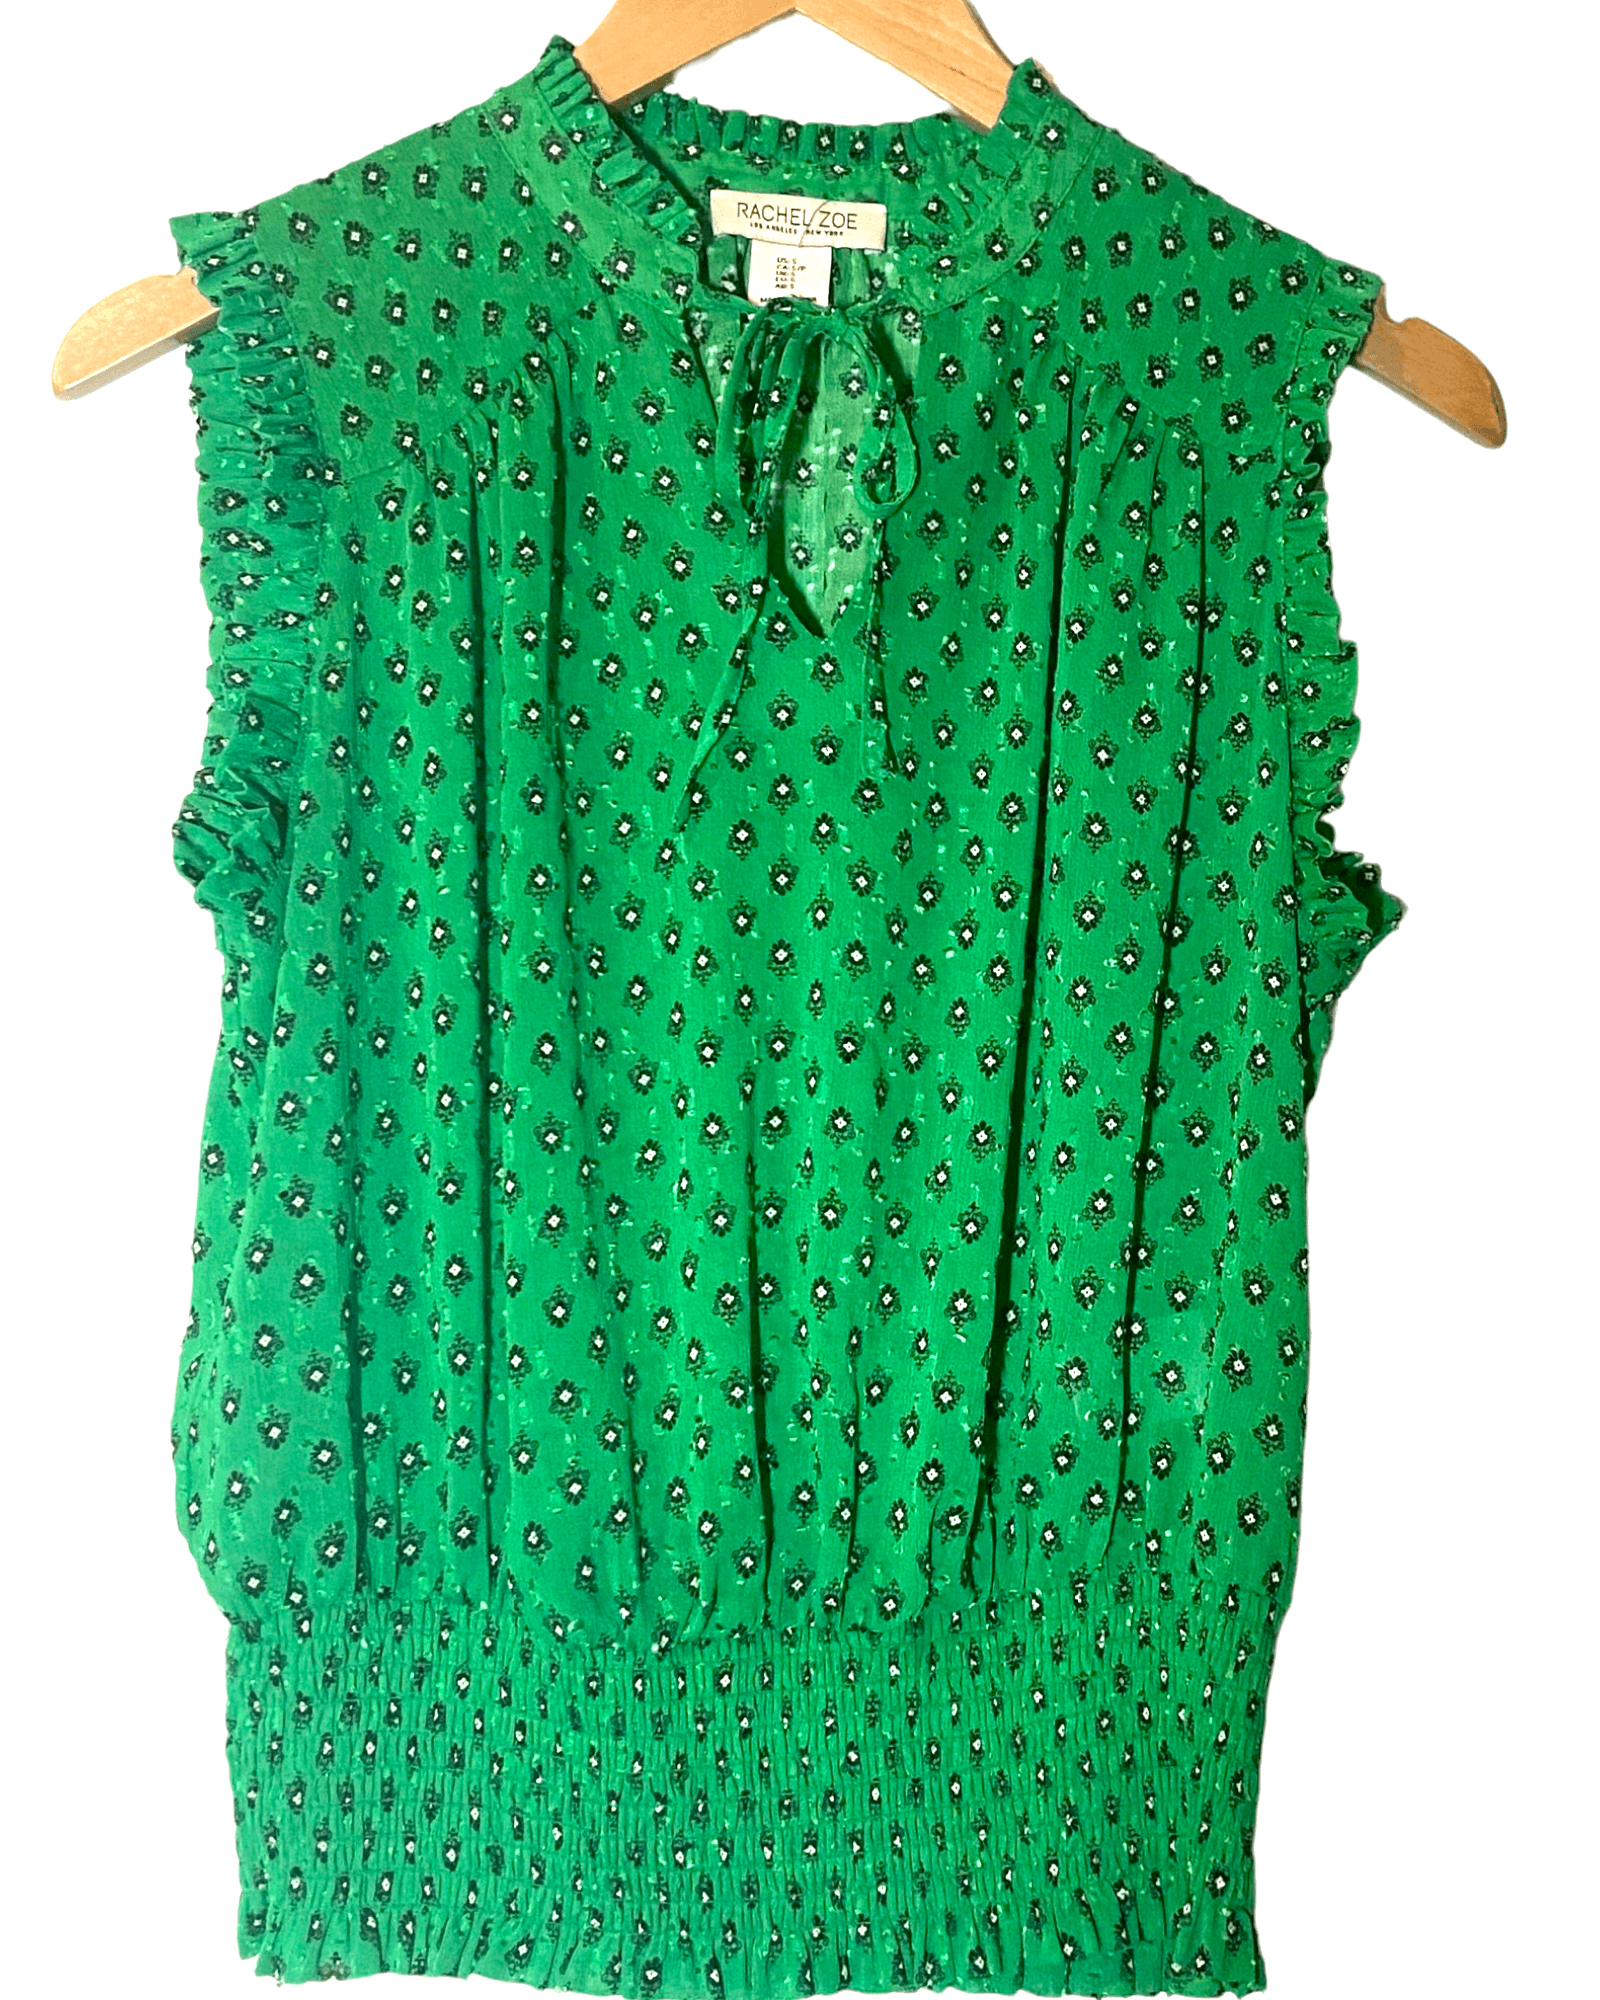 Bright Spring RACHEL ZOE green floral print sleeveless tie top